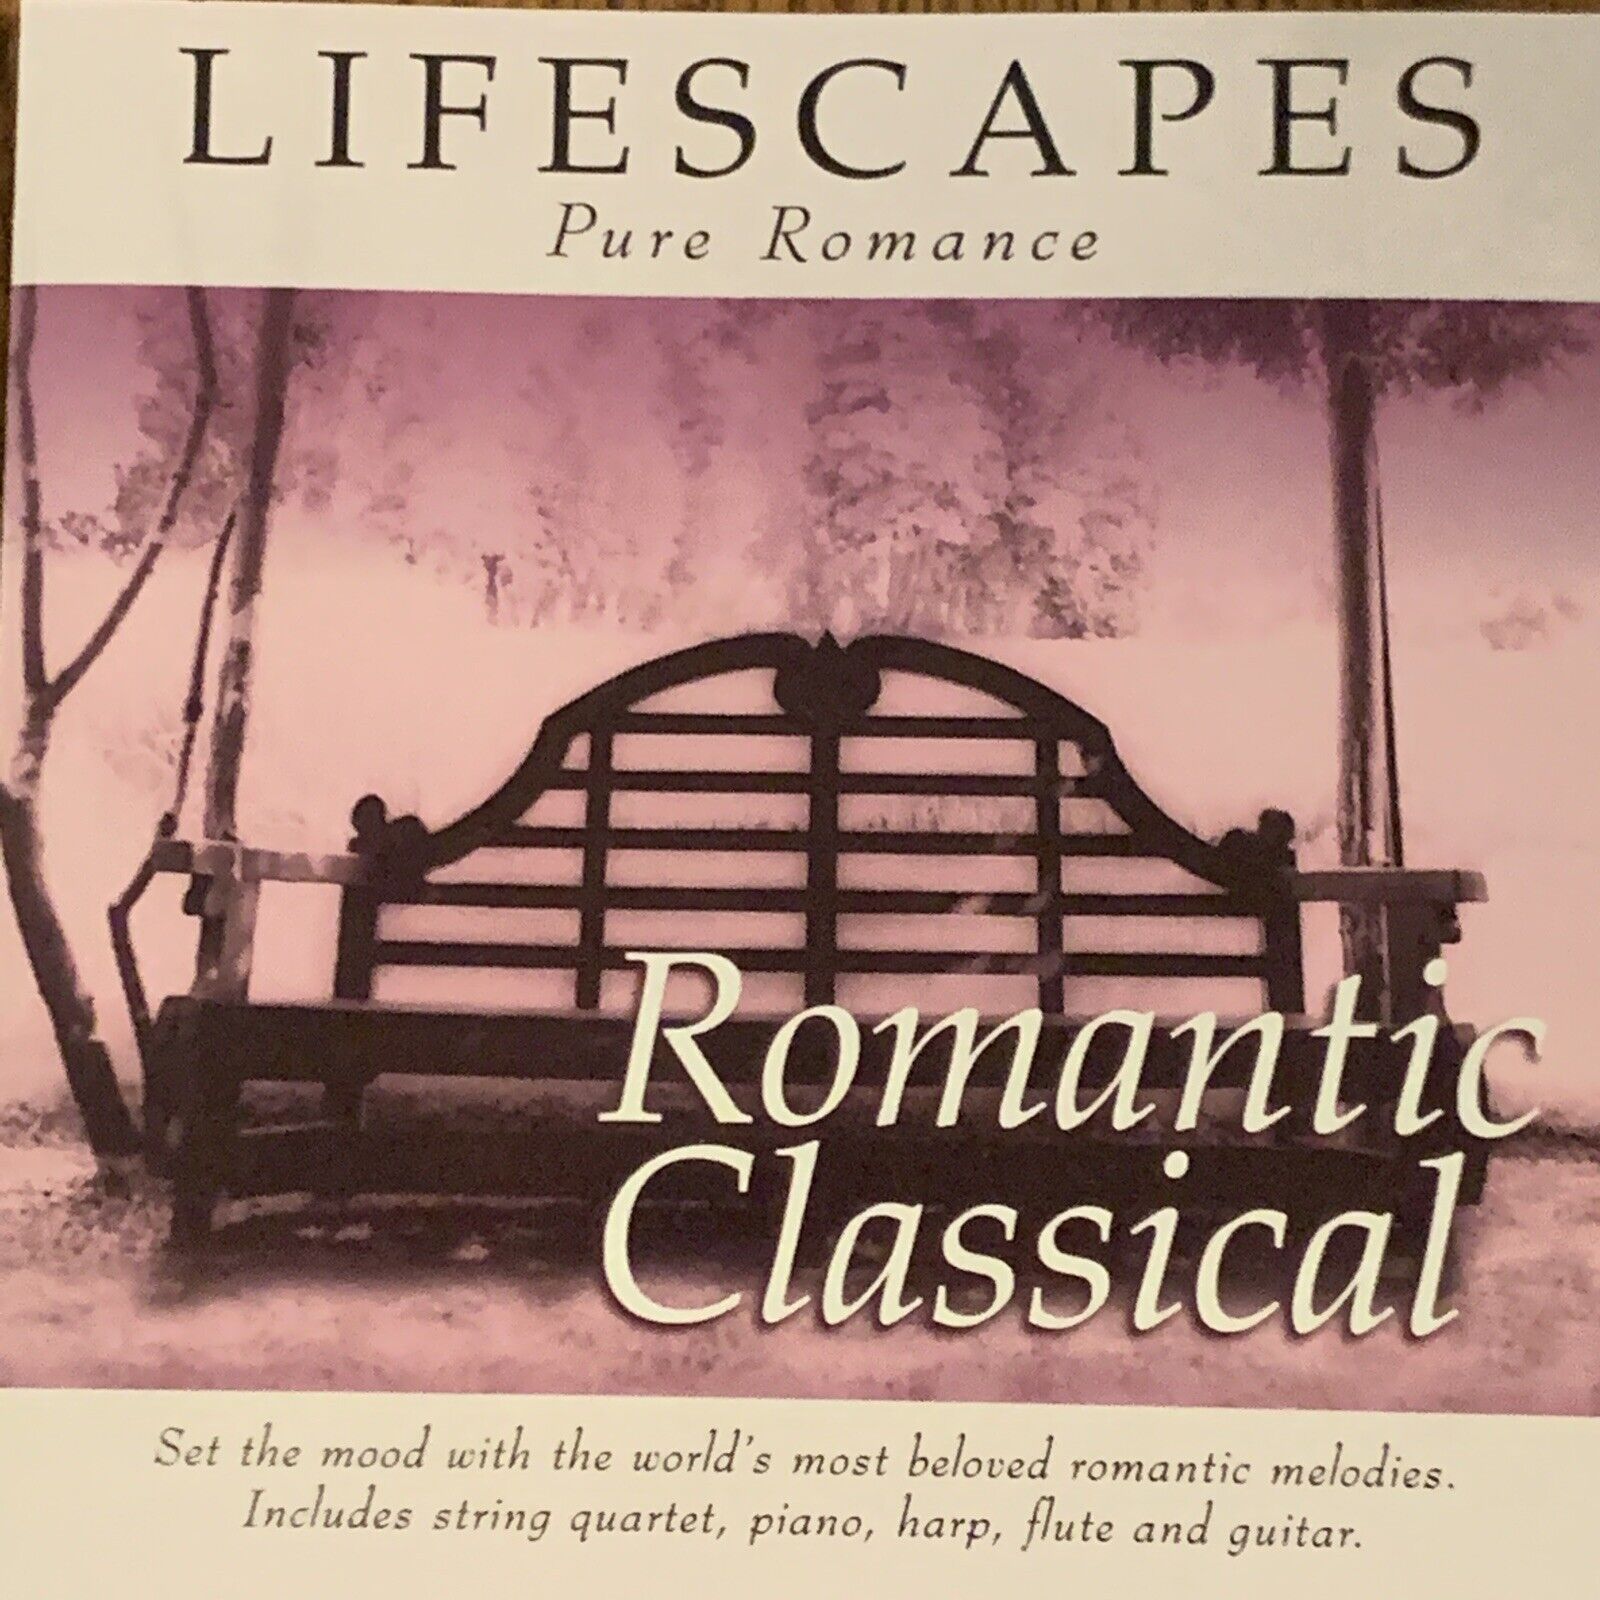 Lifescapes Pure Romance: Romantic Classical [Audio CD]